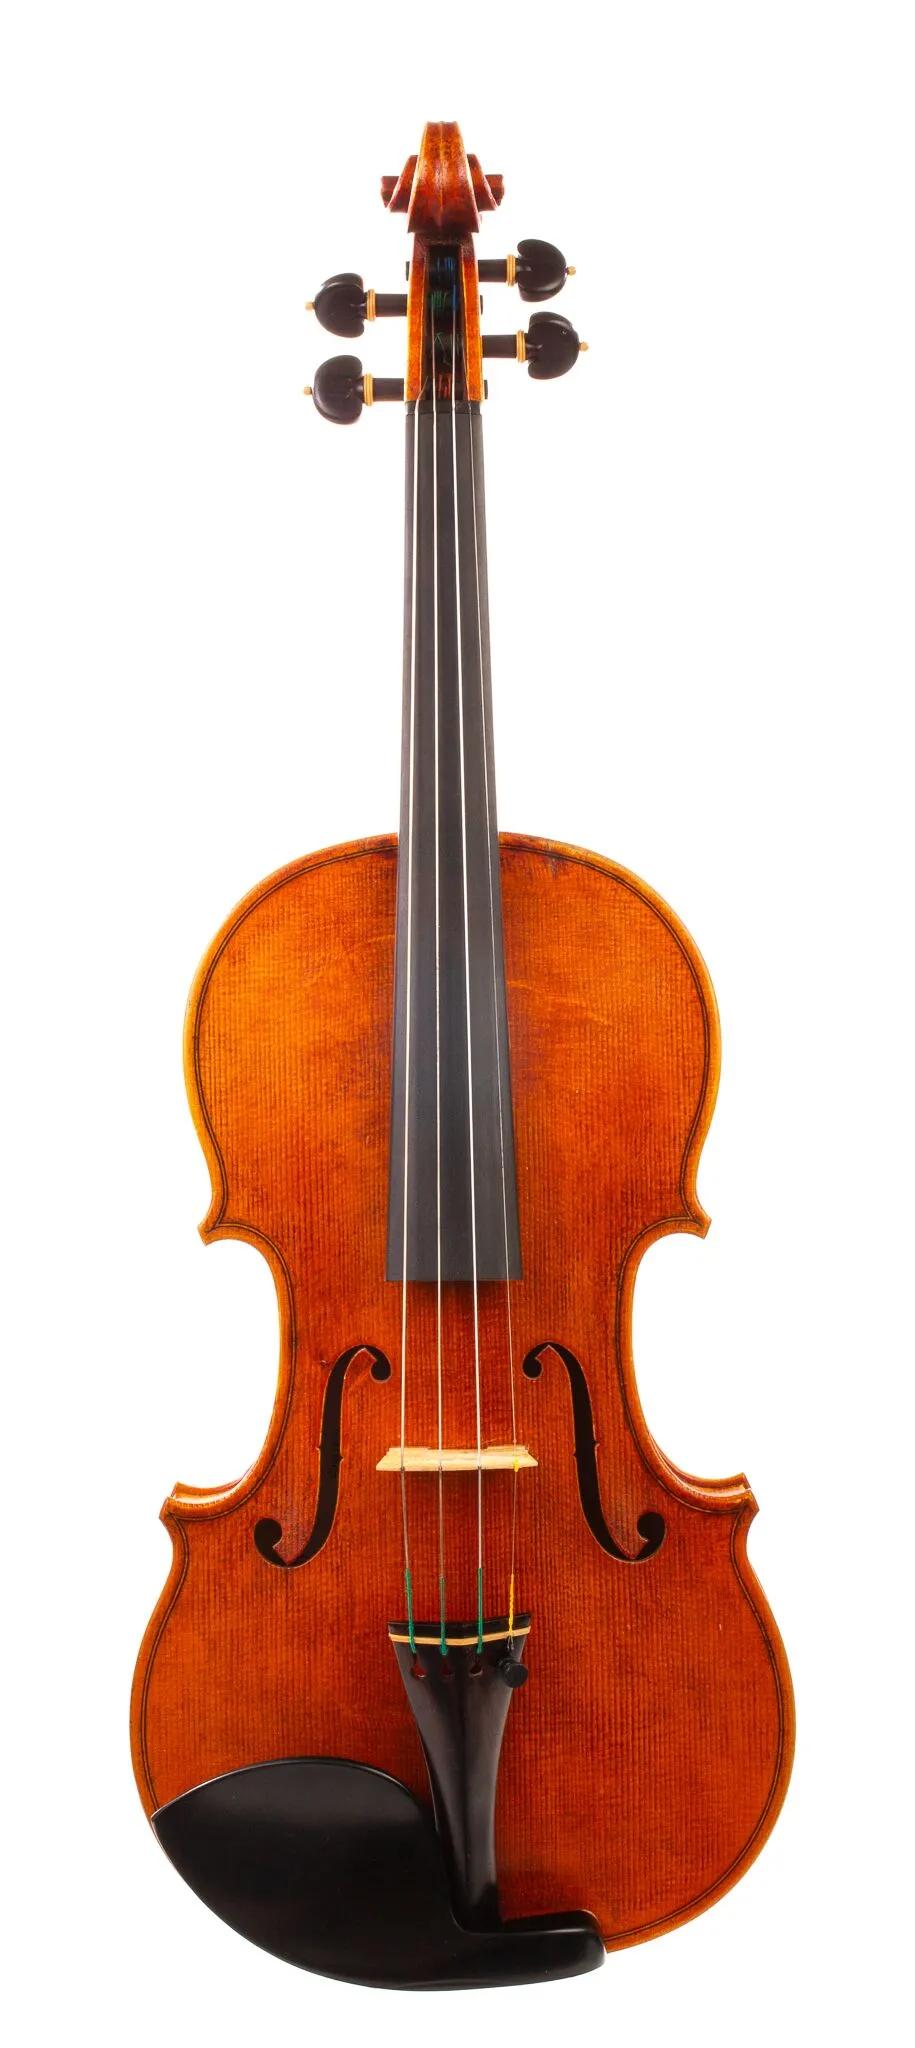 becker violin - Are Becker violins any good